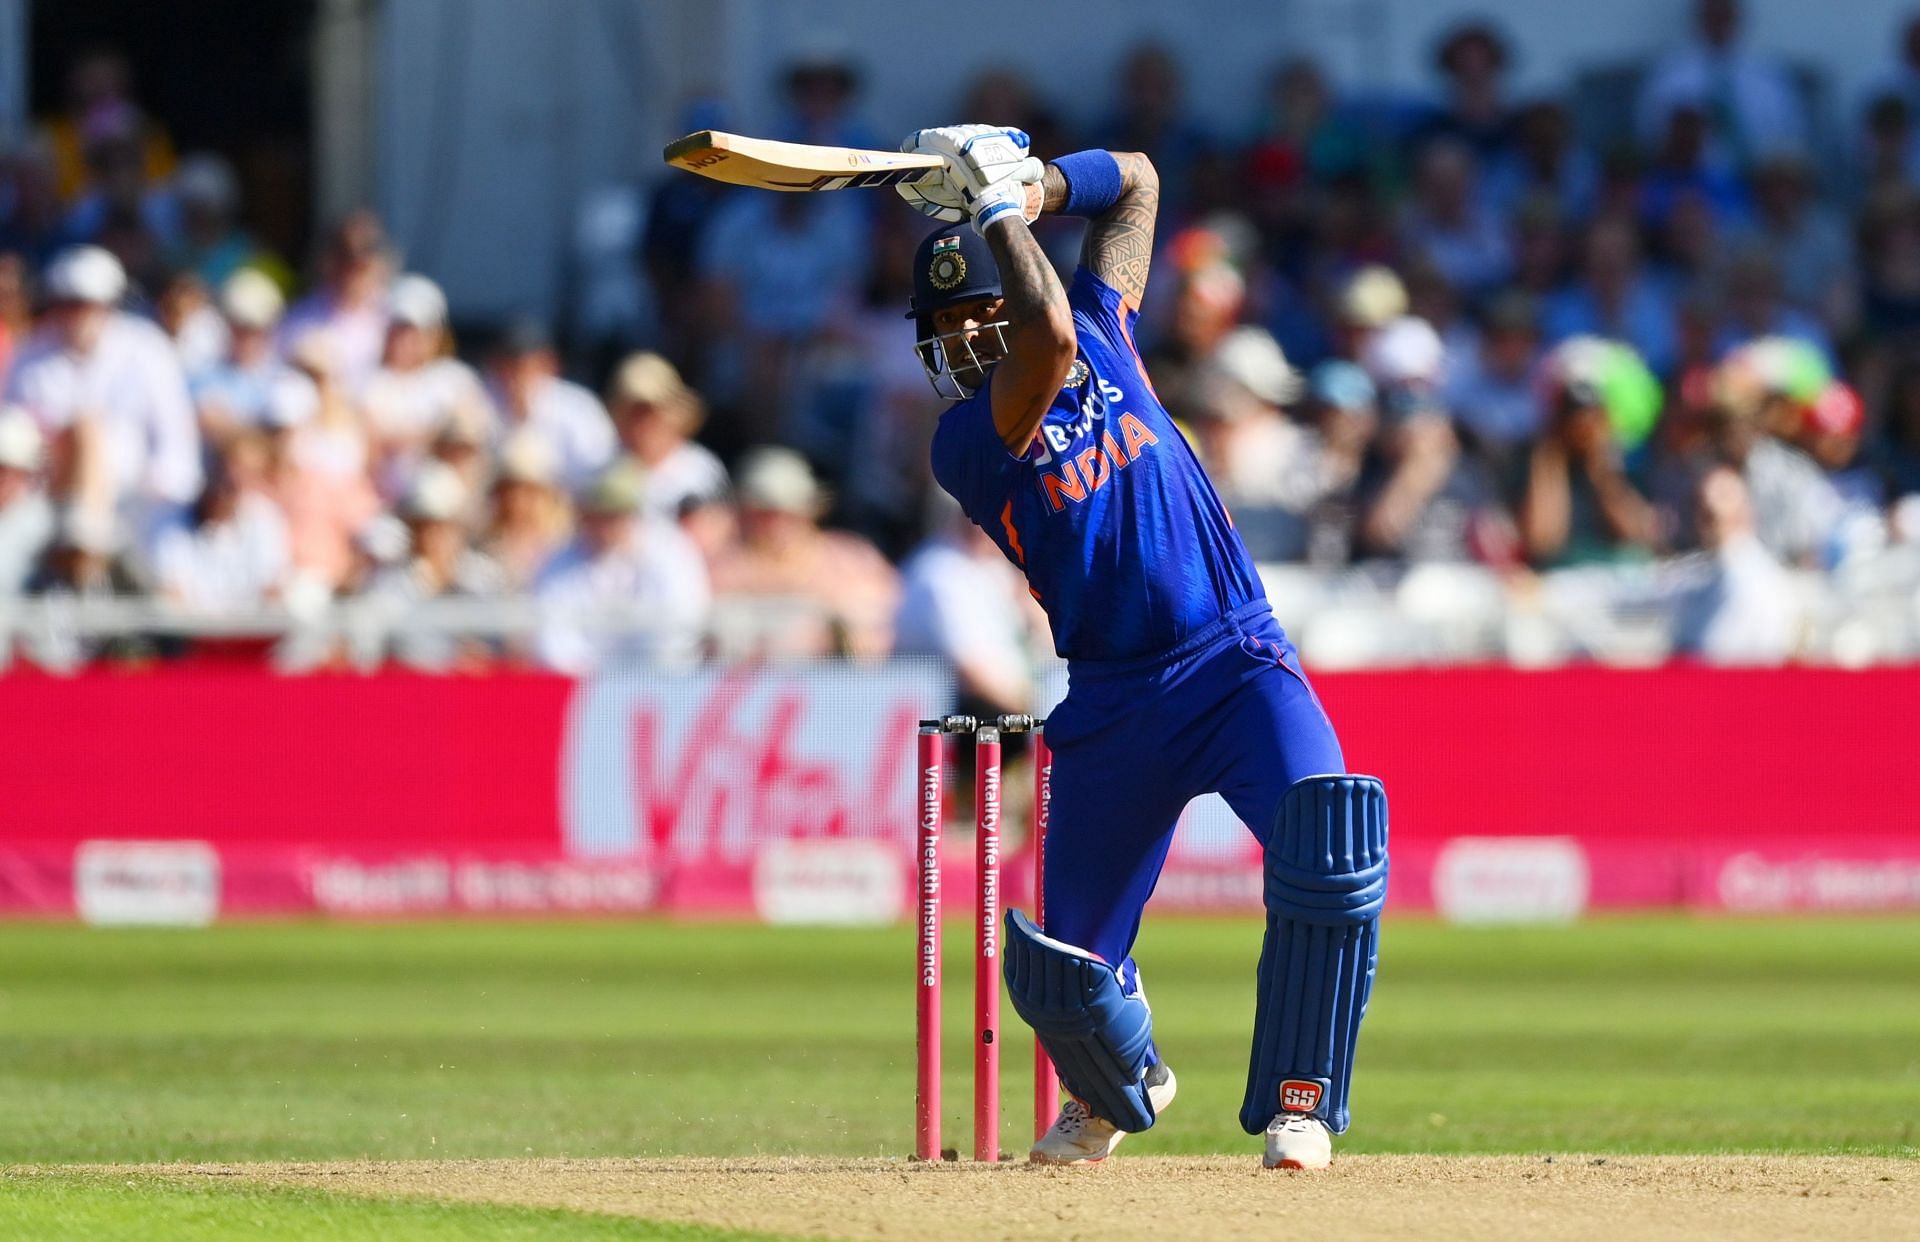 Suryakumar Yadav played some unbelievable shots during his innings